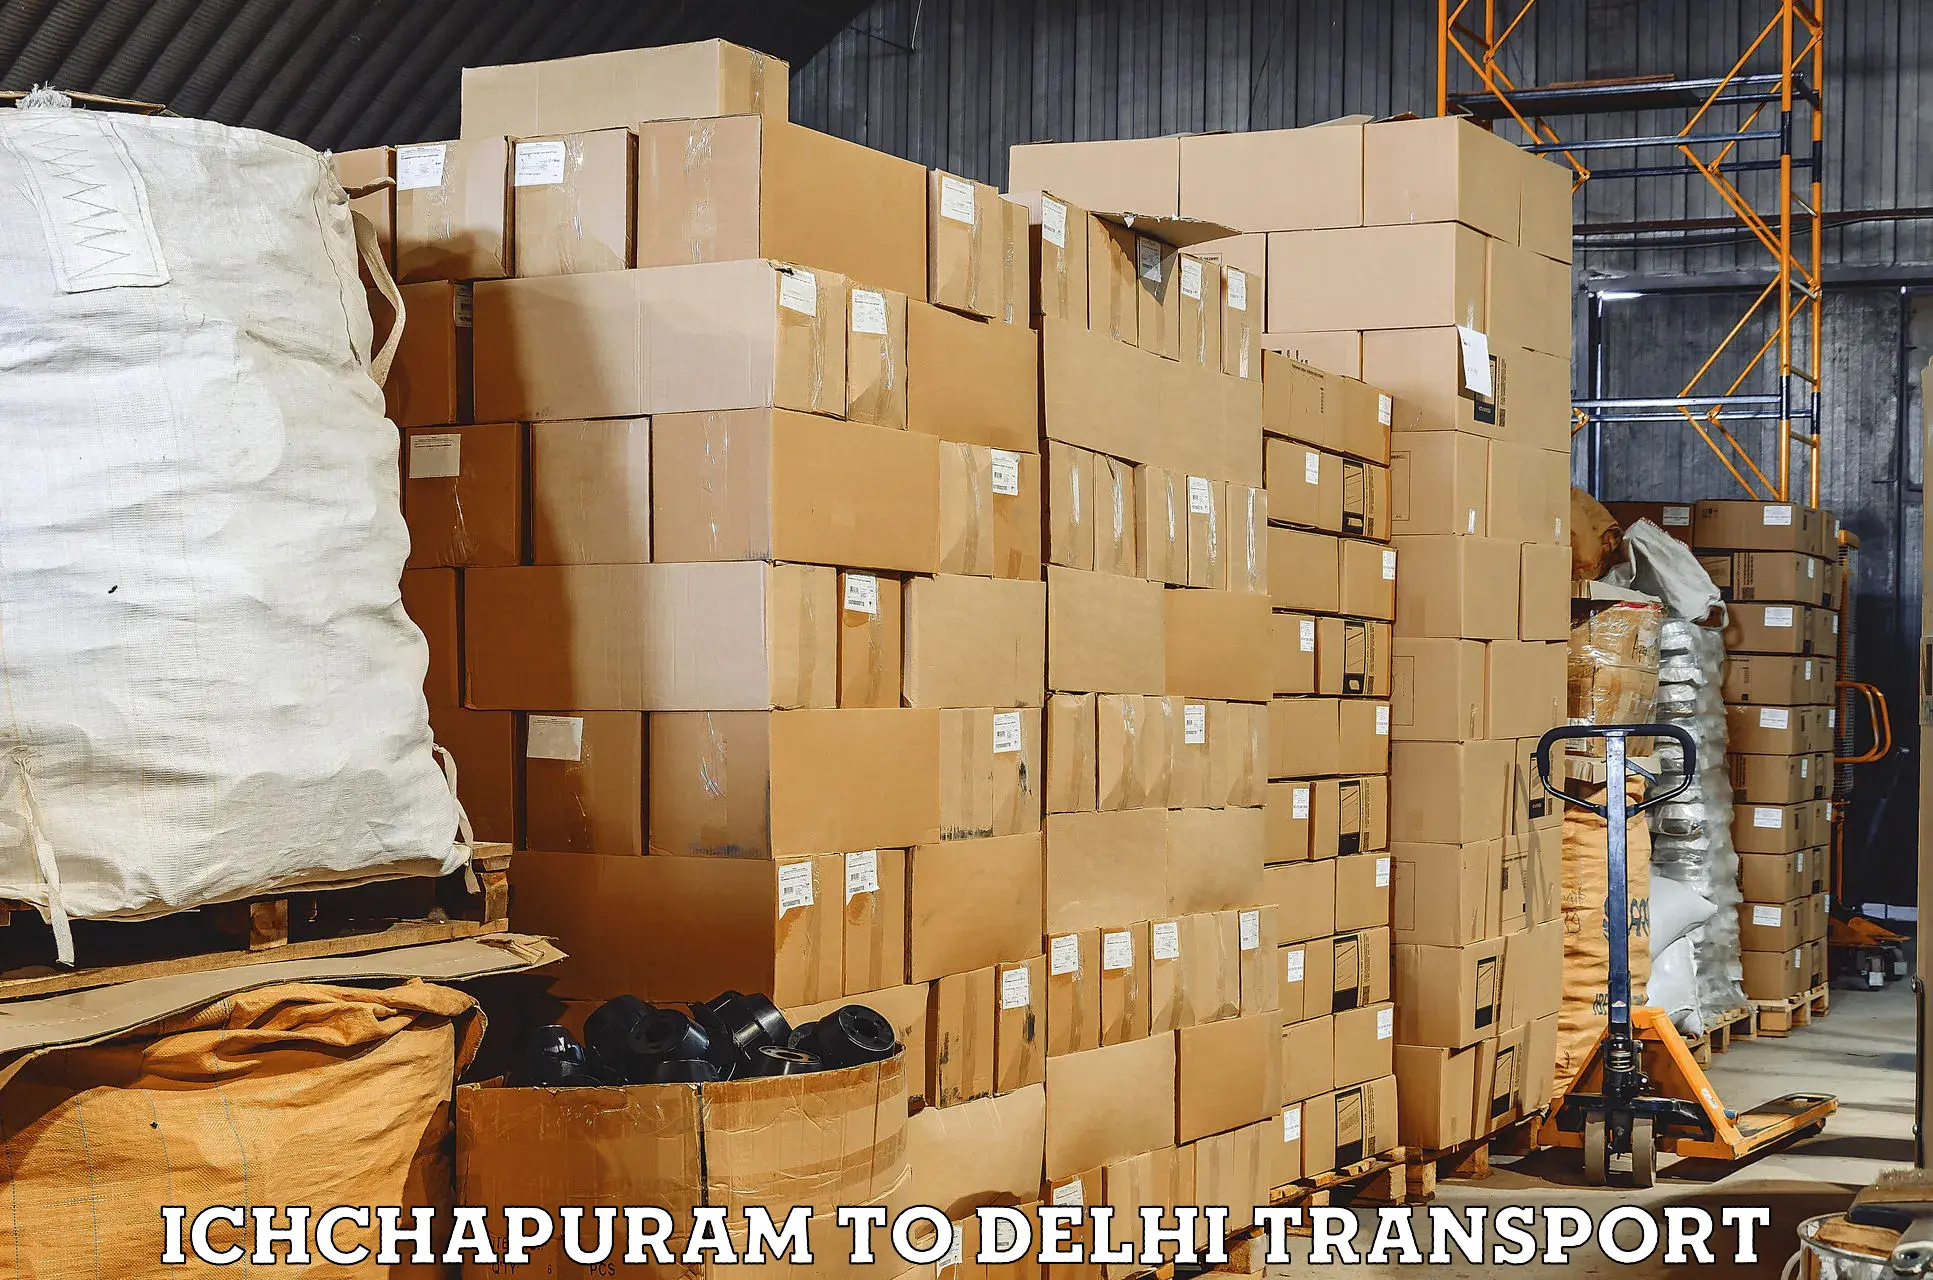 Transport bike from one state to another Ichchapuram to Delhi